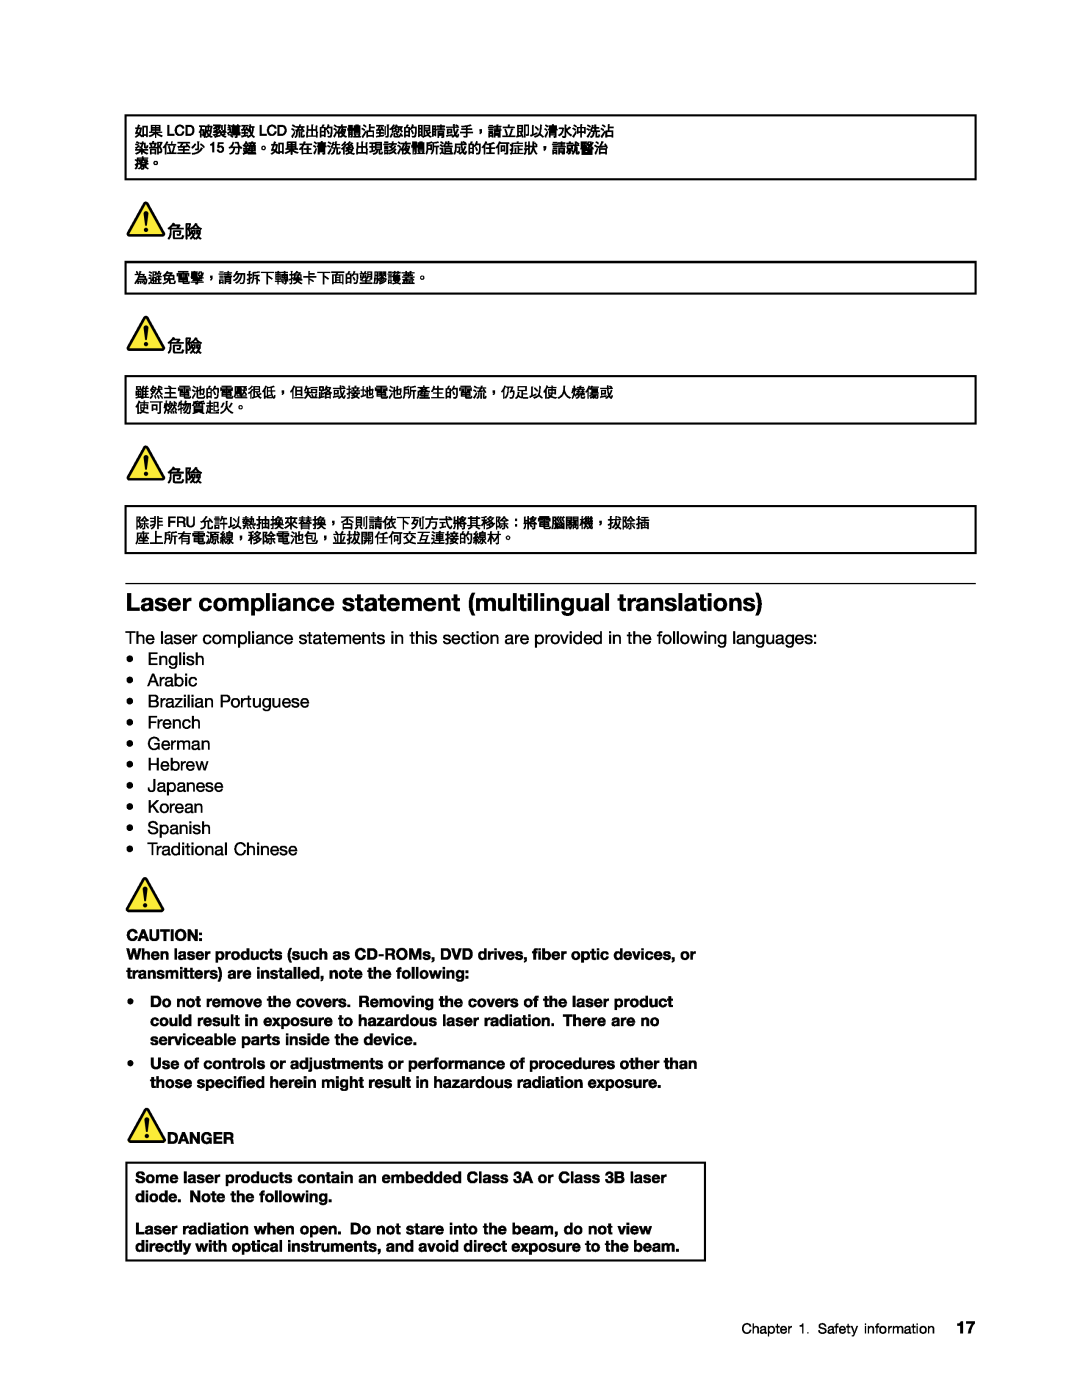 Lenovo T420i manual Laser compliance statement multilingual translations, Korean Spanish Traditional Chinese 